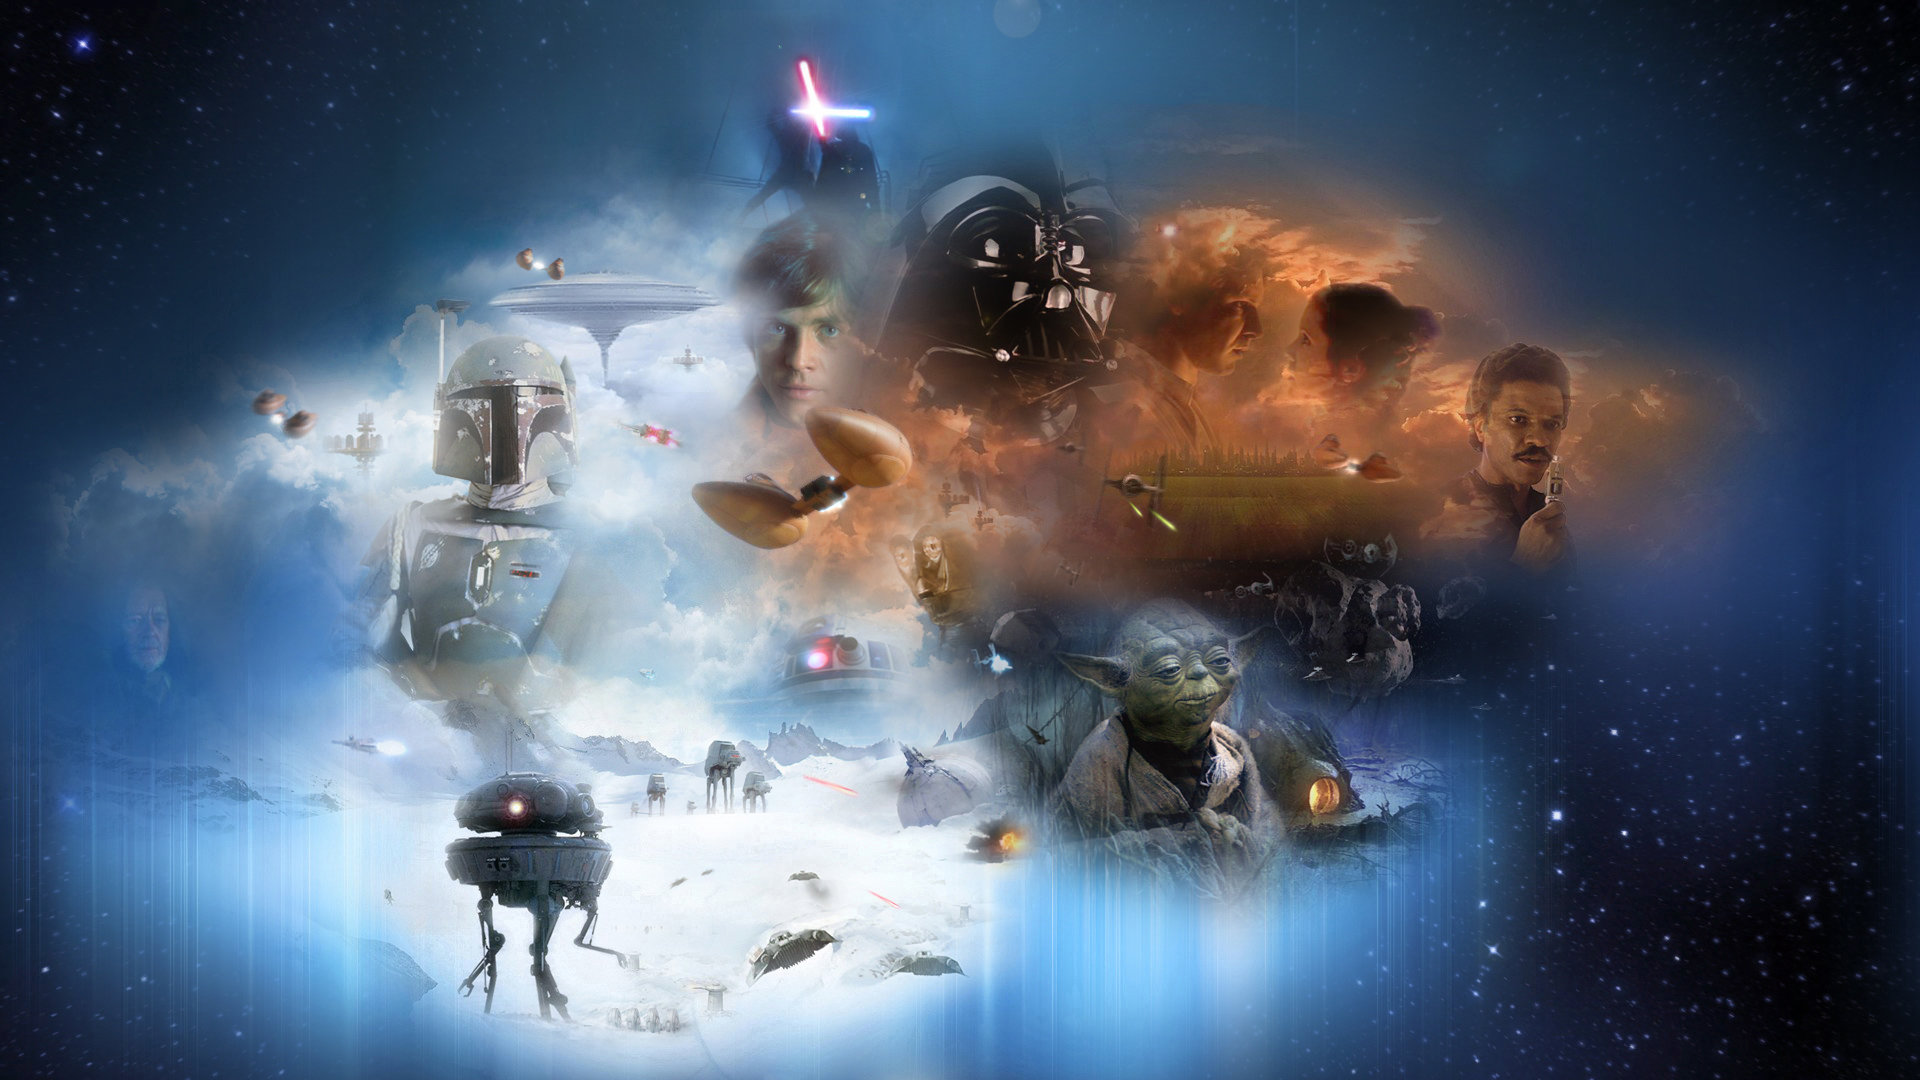 Free download Star Wars Episode 5 (V): The Empire Strikes Back wallpaper ID:123504 1080p for desktop